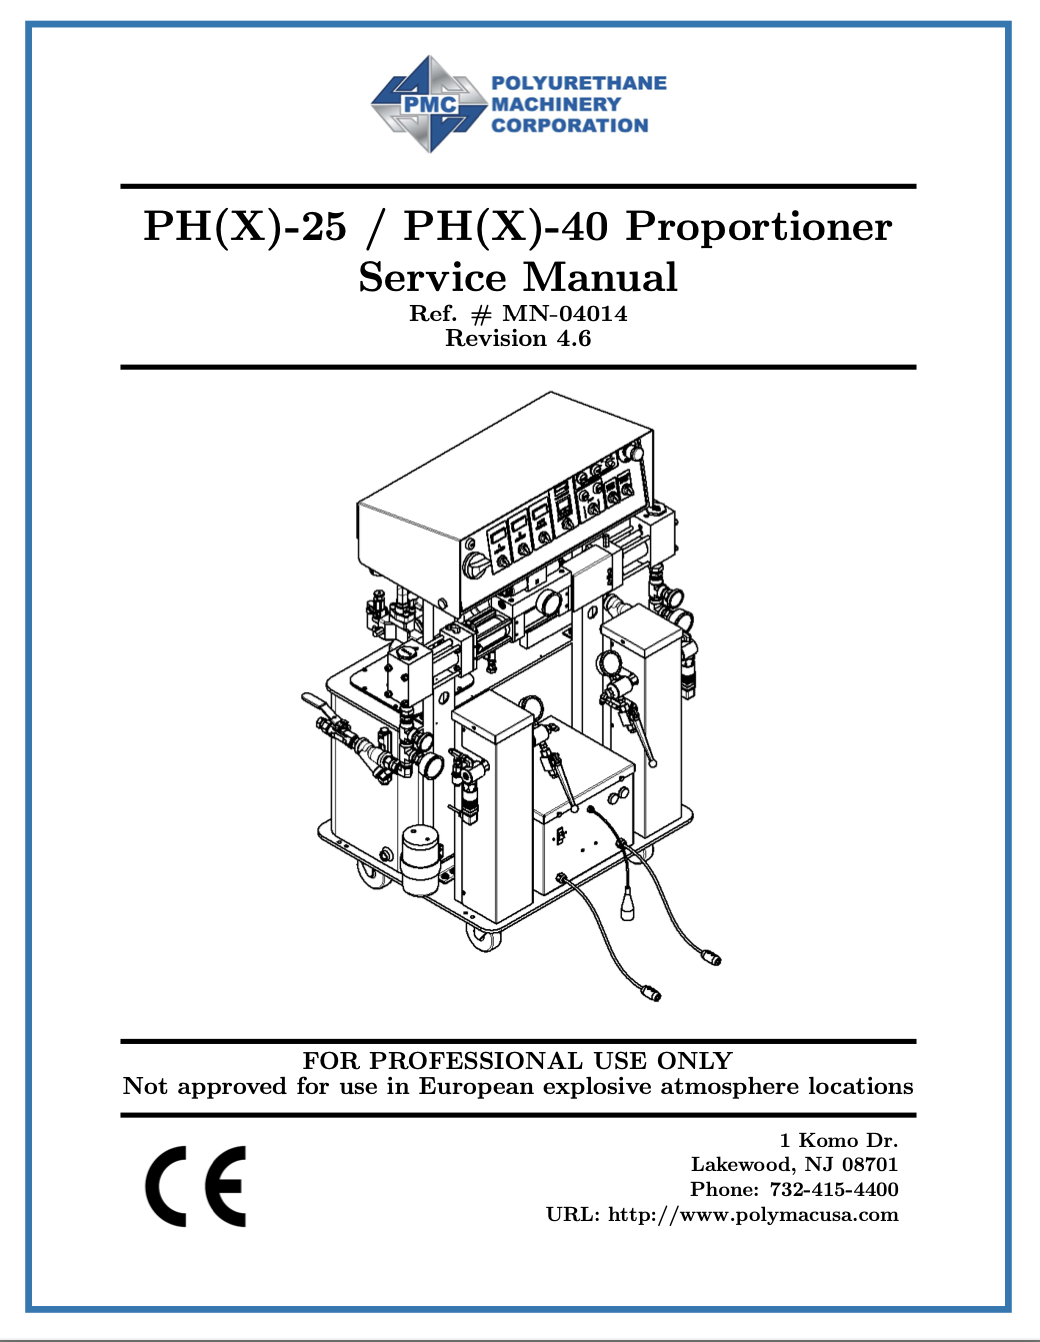 PMC PH(X)-25 / PH(X)-40 Proportioner Service-Manual #MN-04014, rev 4.6